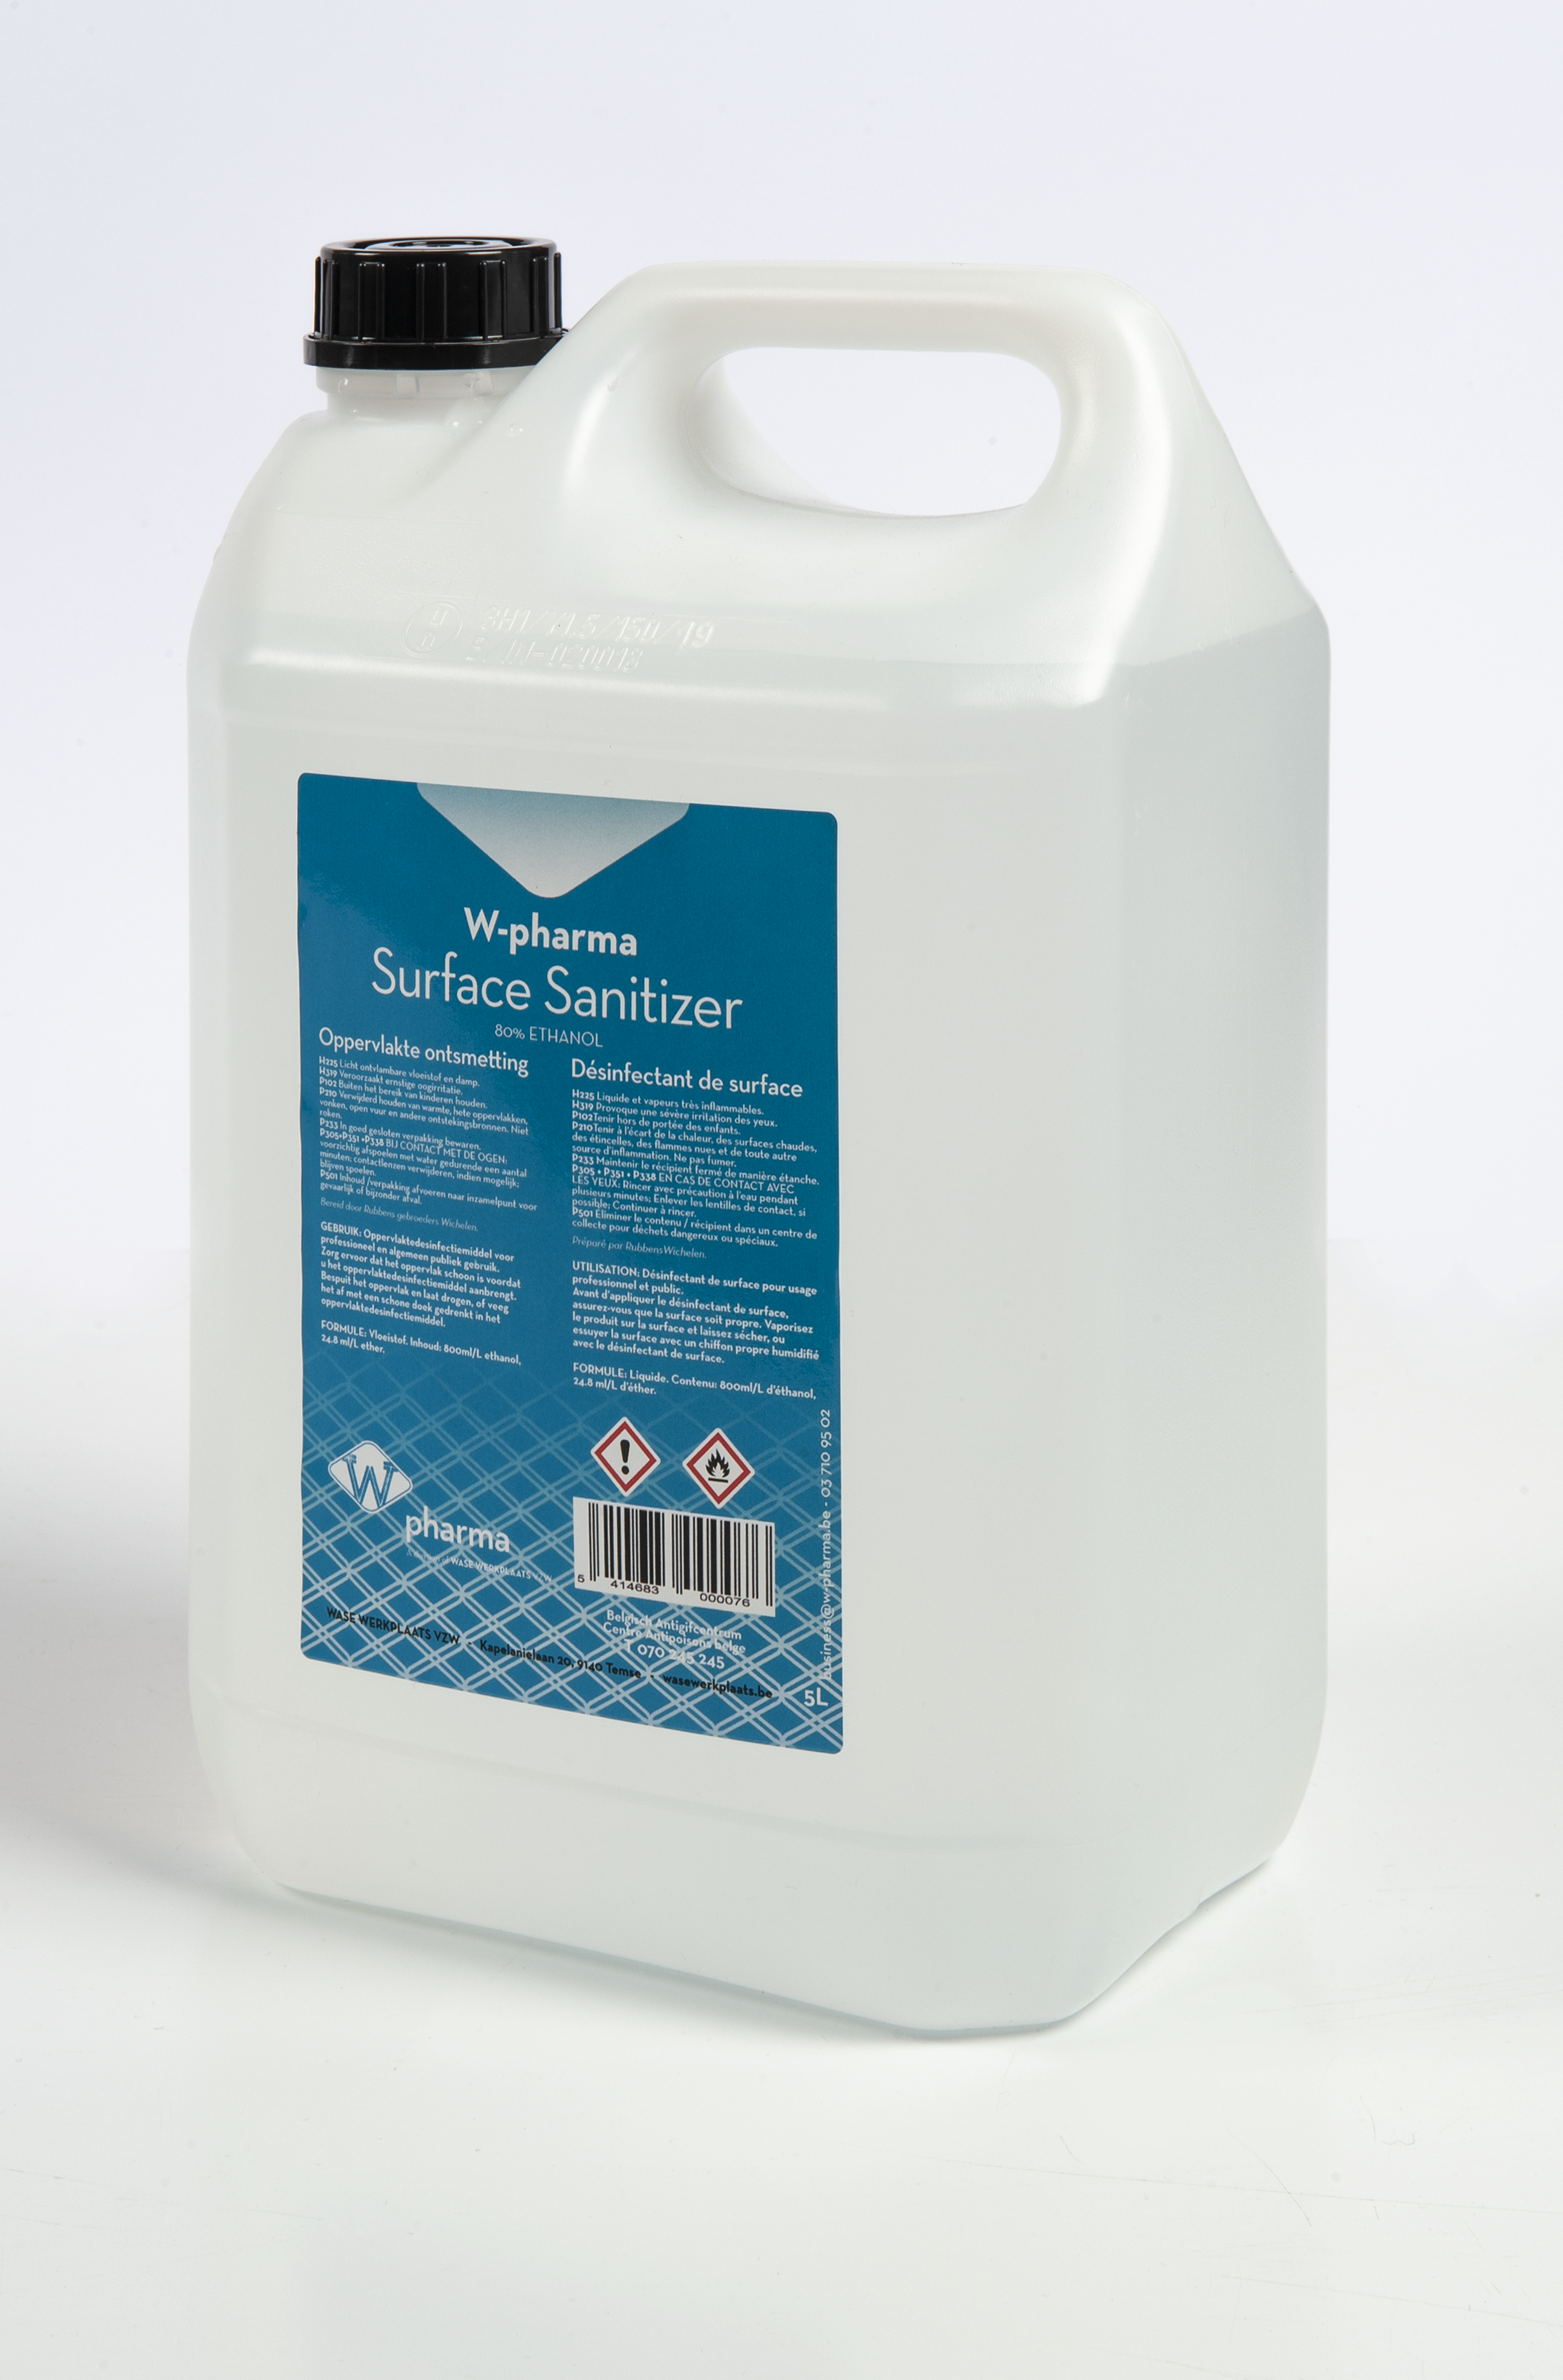 W-pharma, surface sanitizer 5l